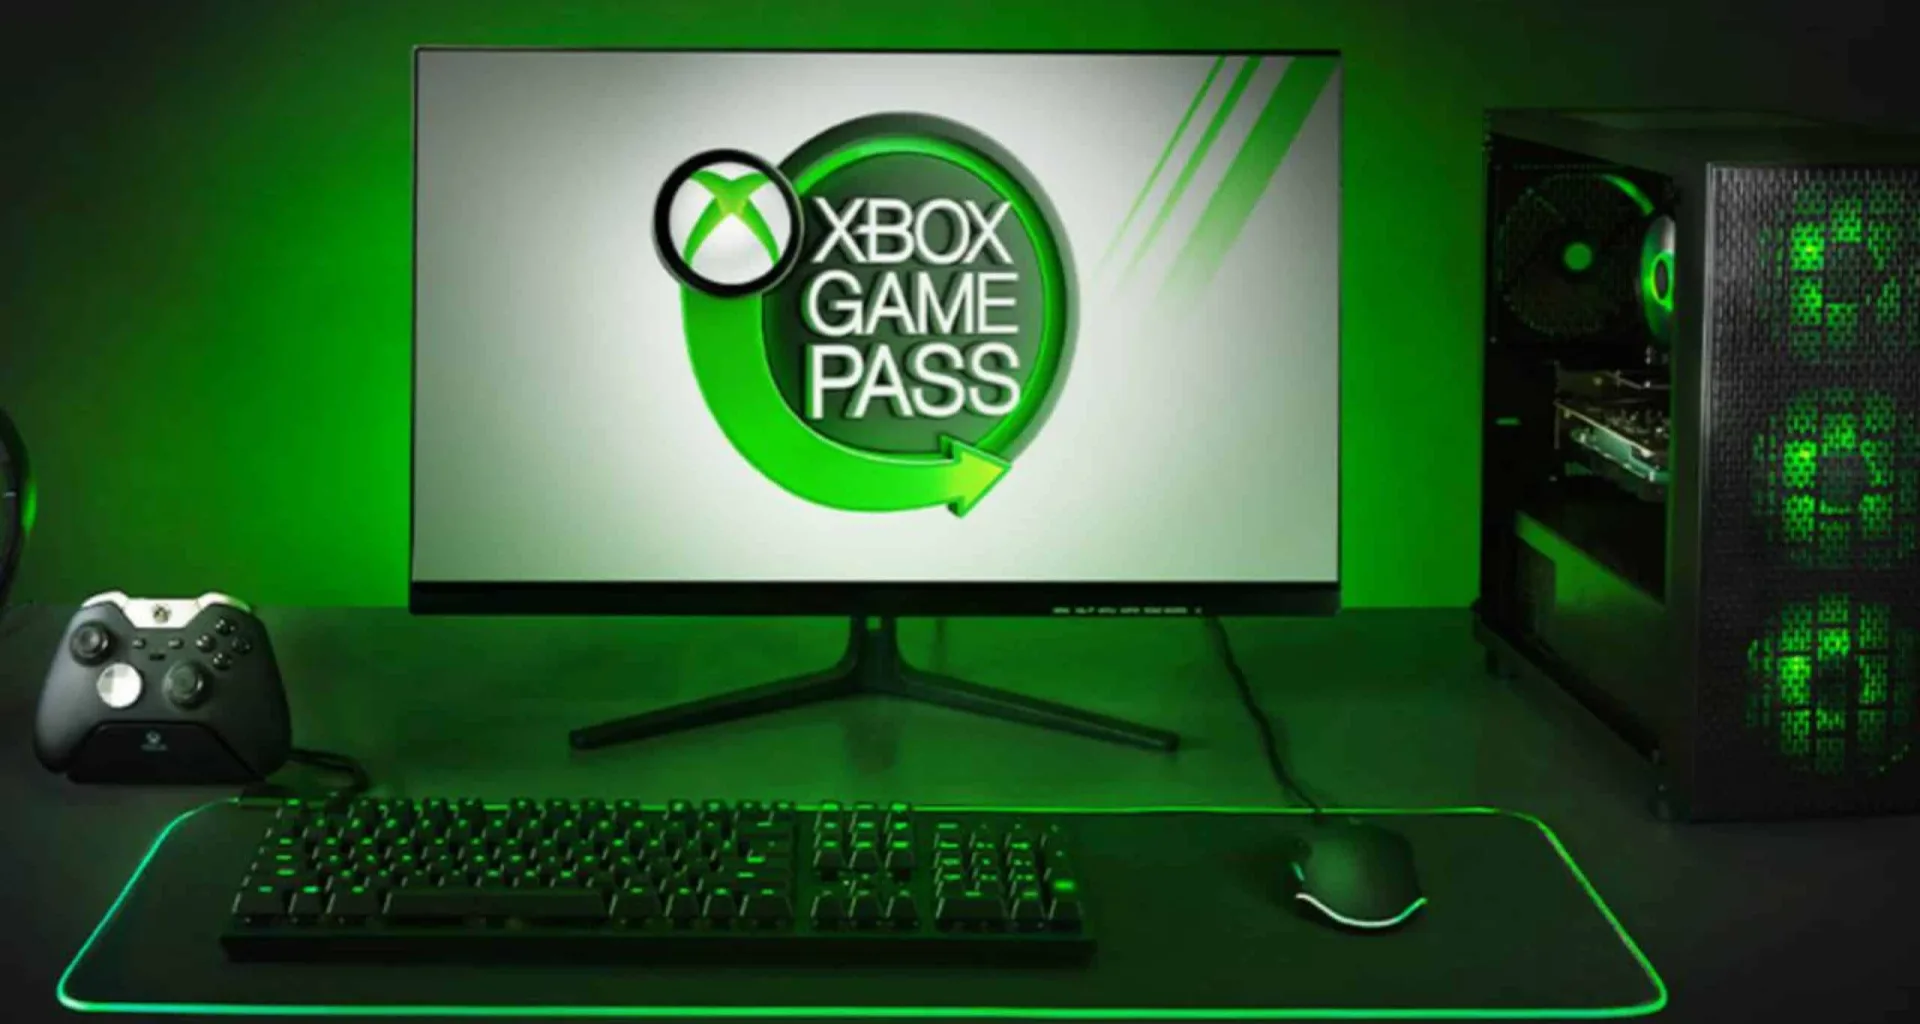 Xbox game pass chega ao nvidia geforce now nesta semana